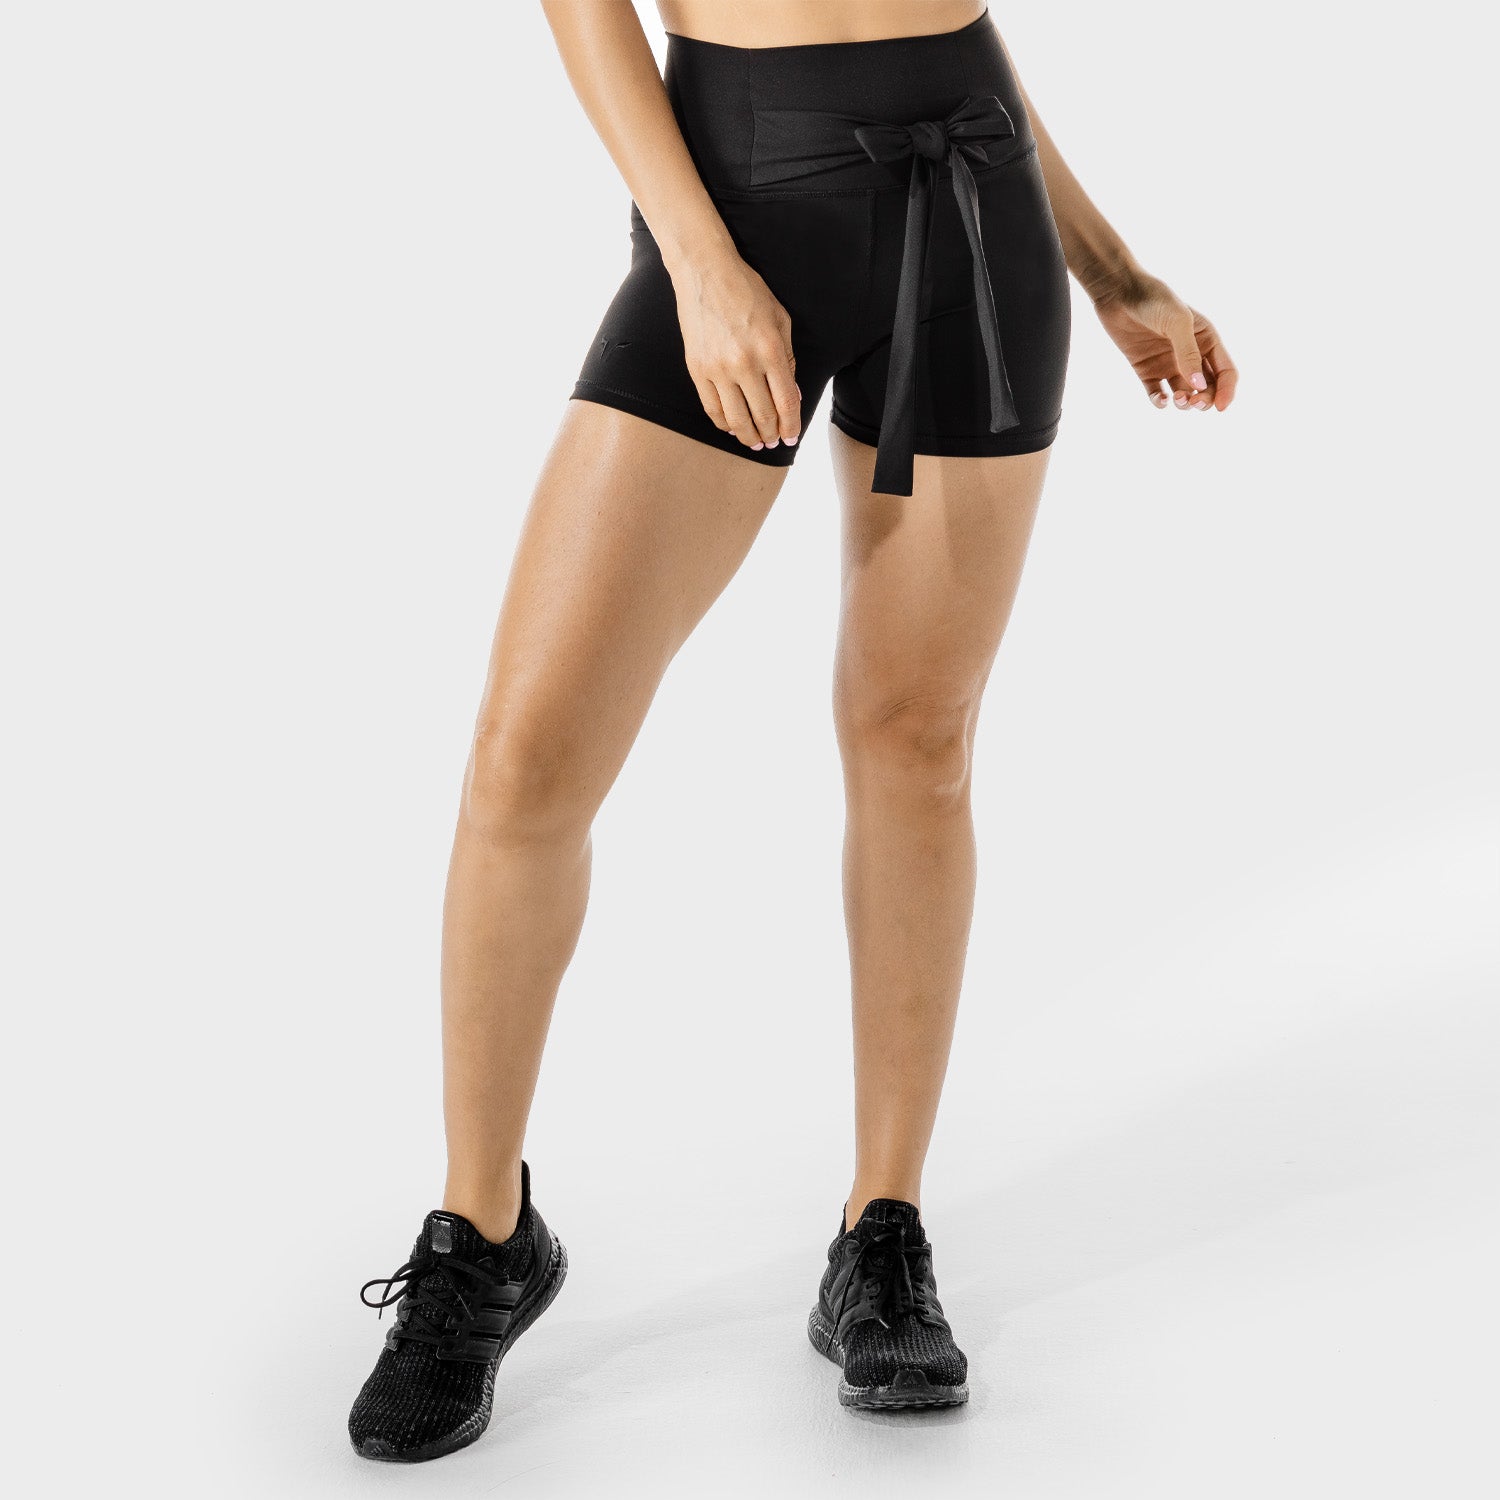 AE, Women's Fitness - Tie Shorts - Black, Workout Shorts Women